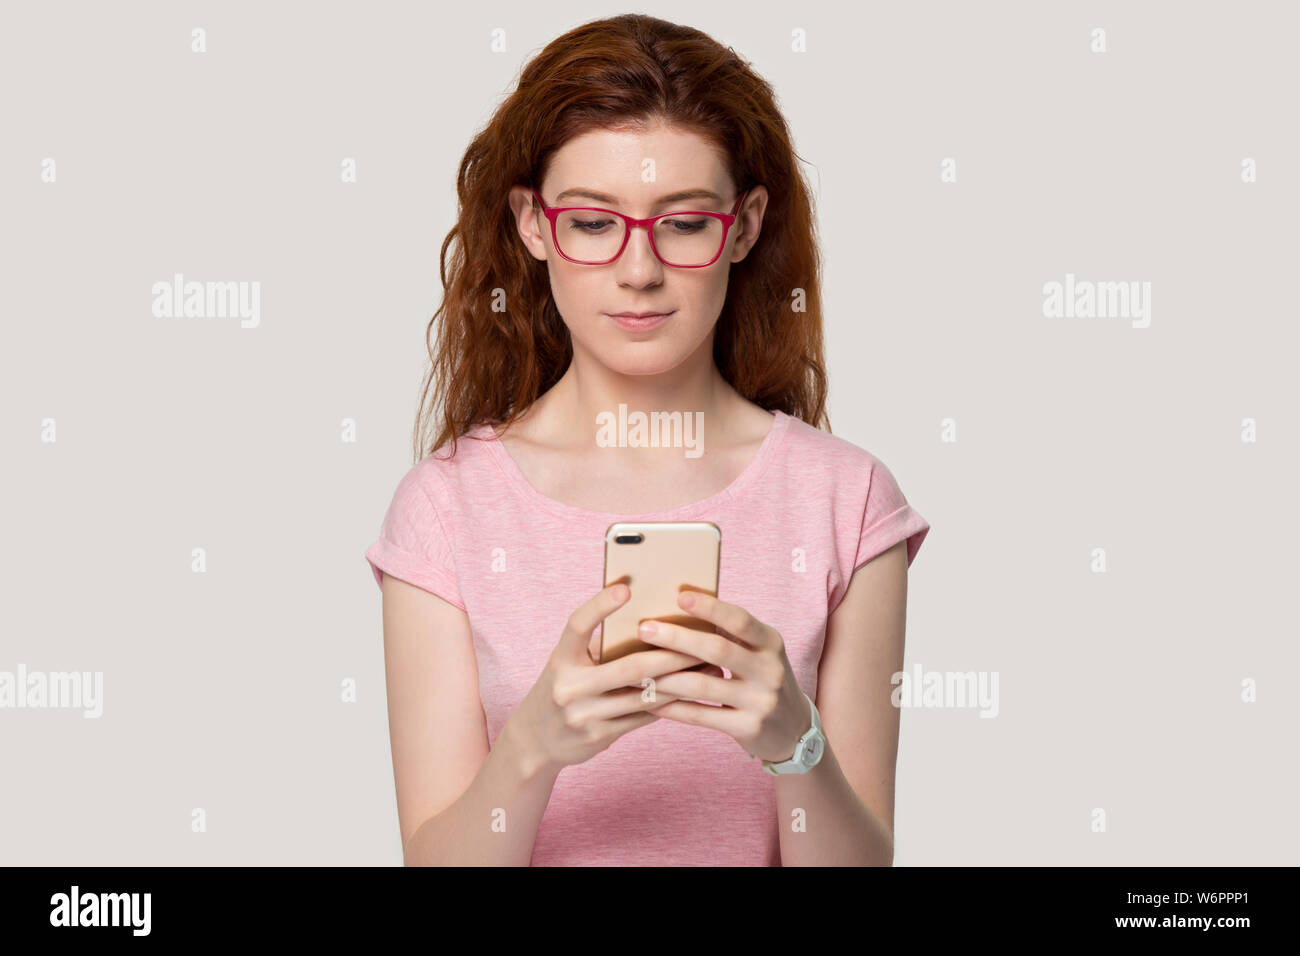 Pretty redhead woman looking at mobile phone screen studio shot Stock Photo